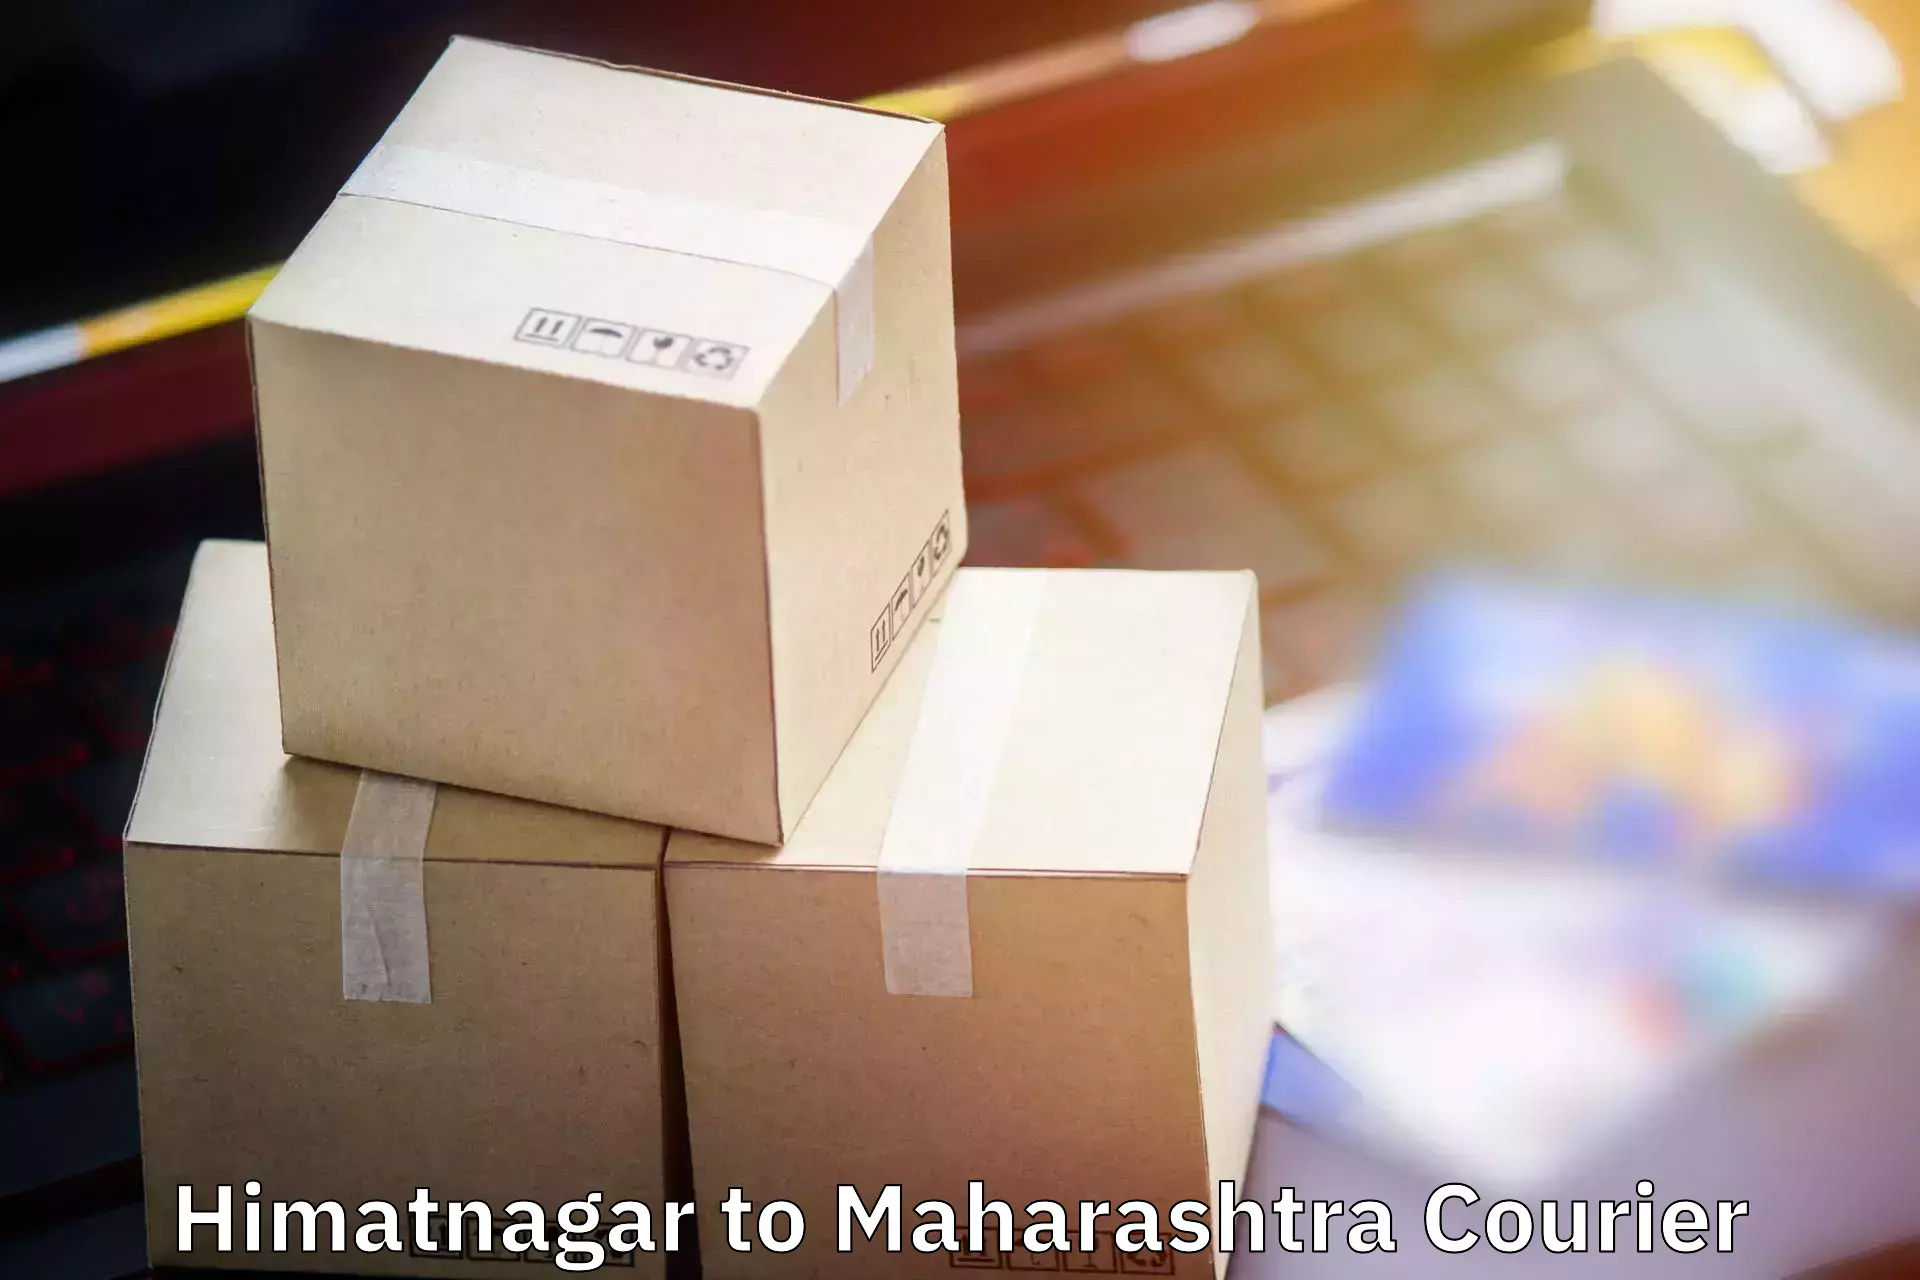 Luggage delivery app Himatnagar to Beed